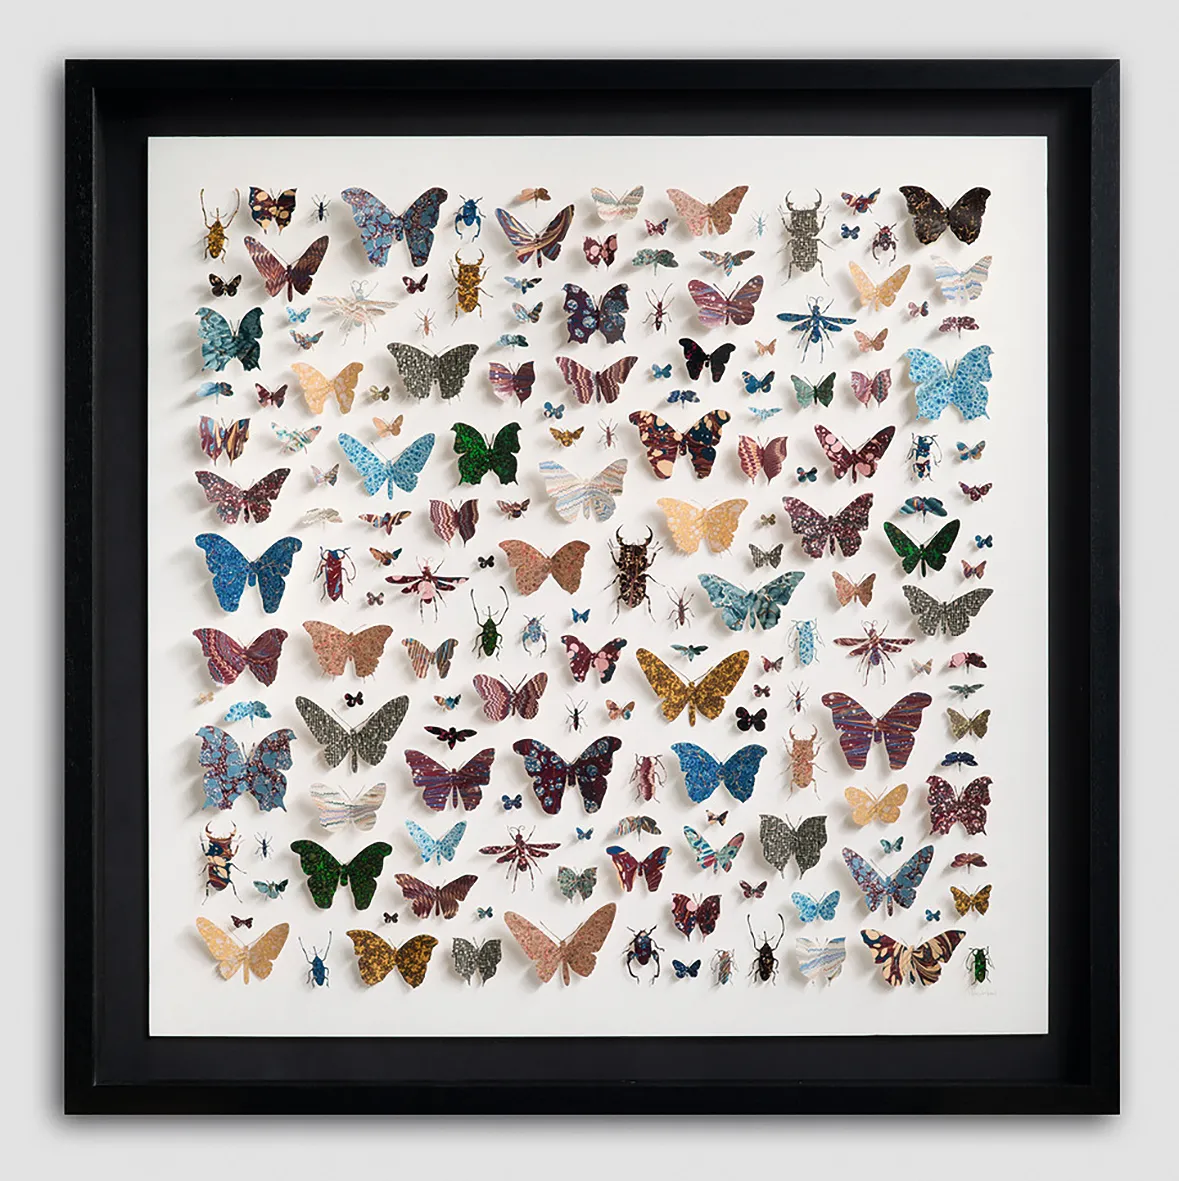 Helen Ward's handmade paper butterflies in a black frame